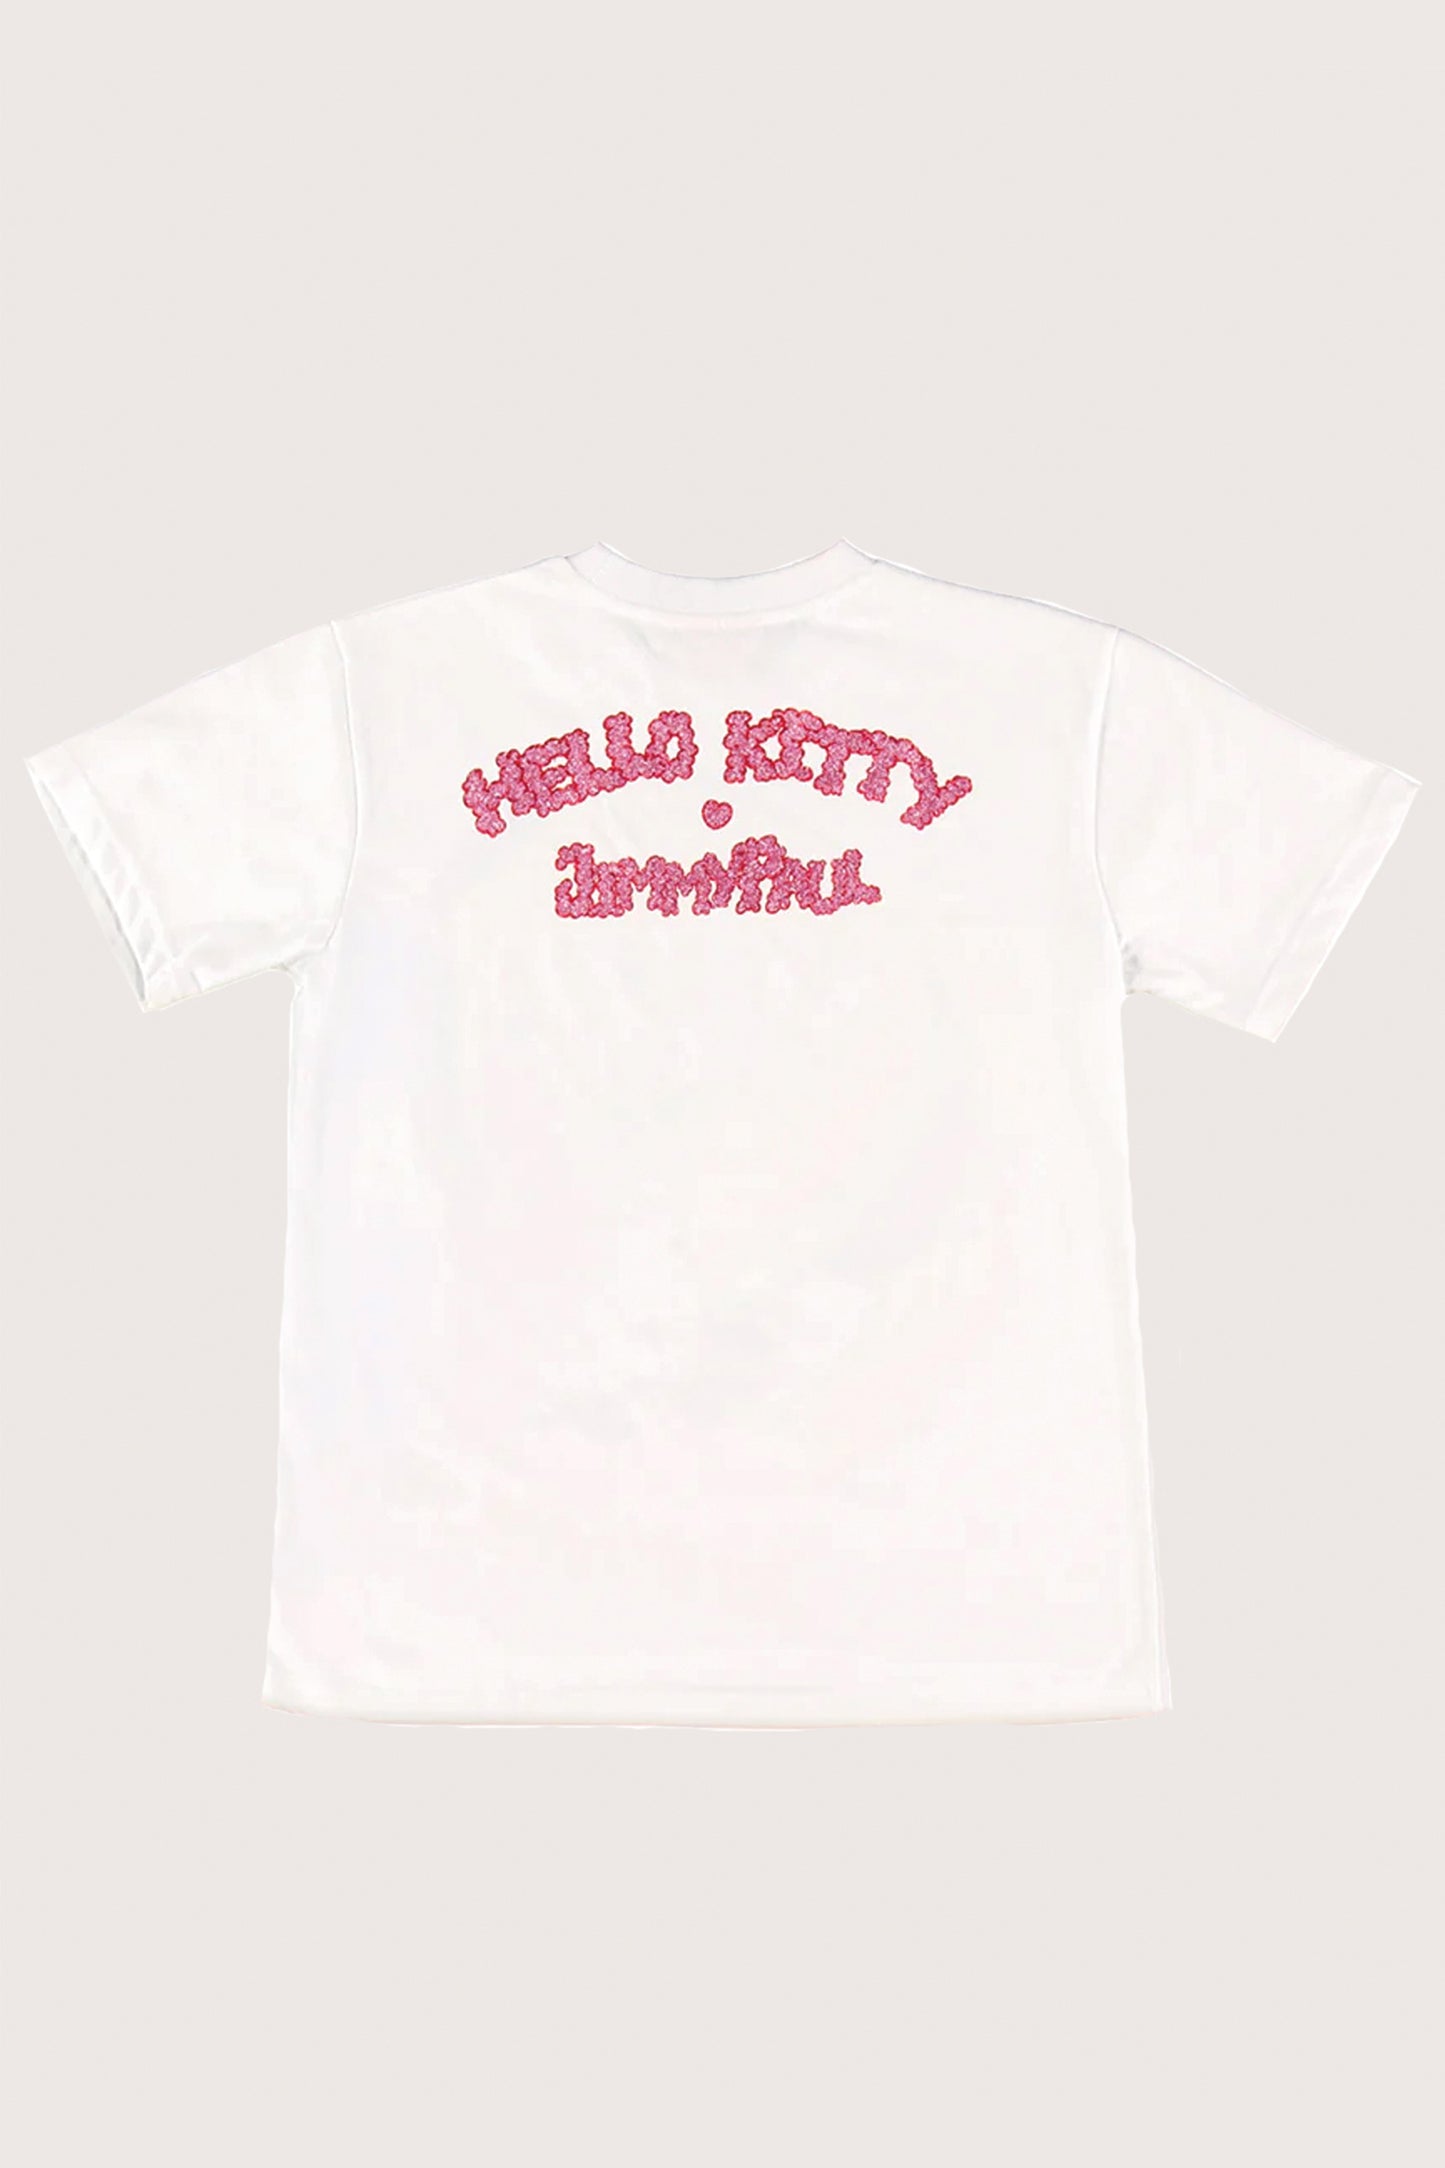 JimmyPaul x Hello Kitty - White Colourful Print Top